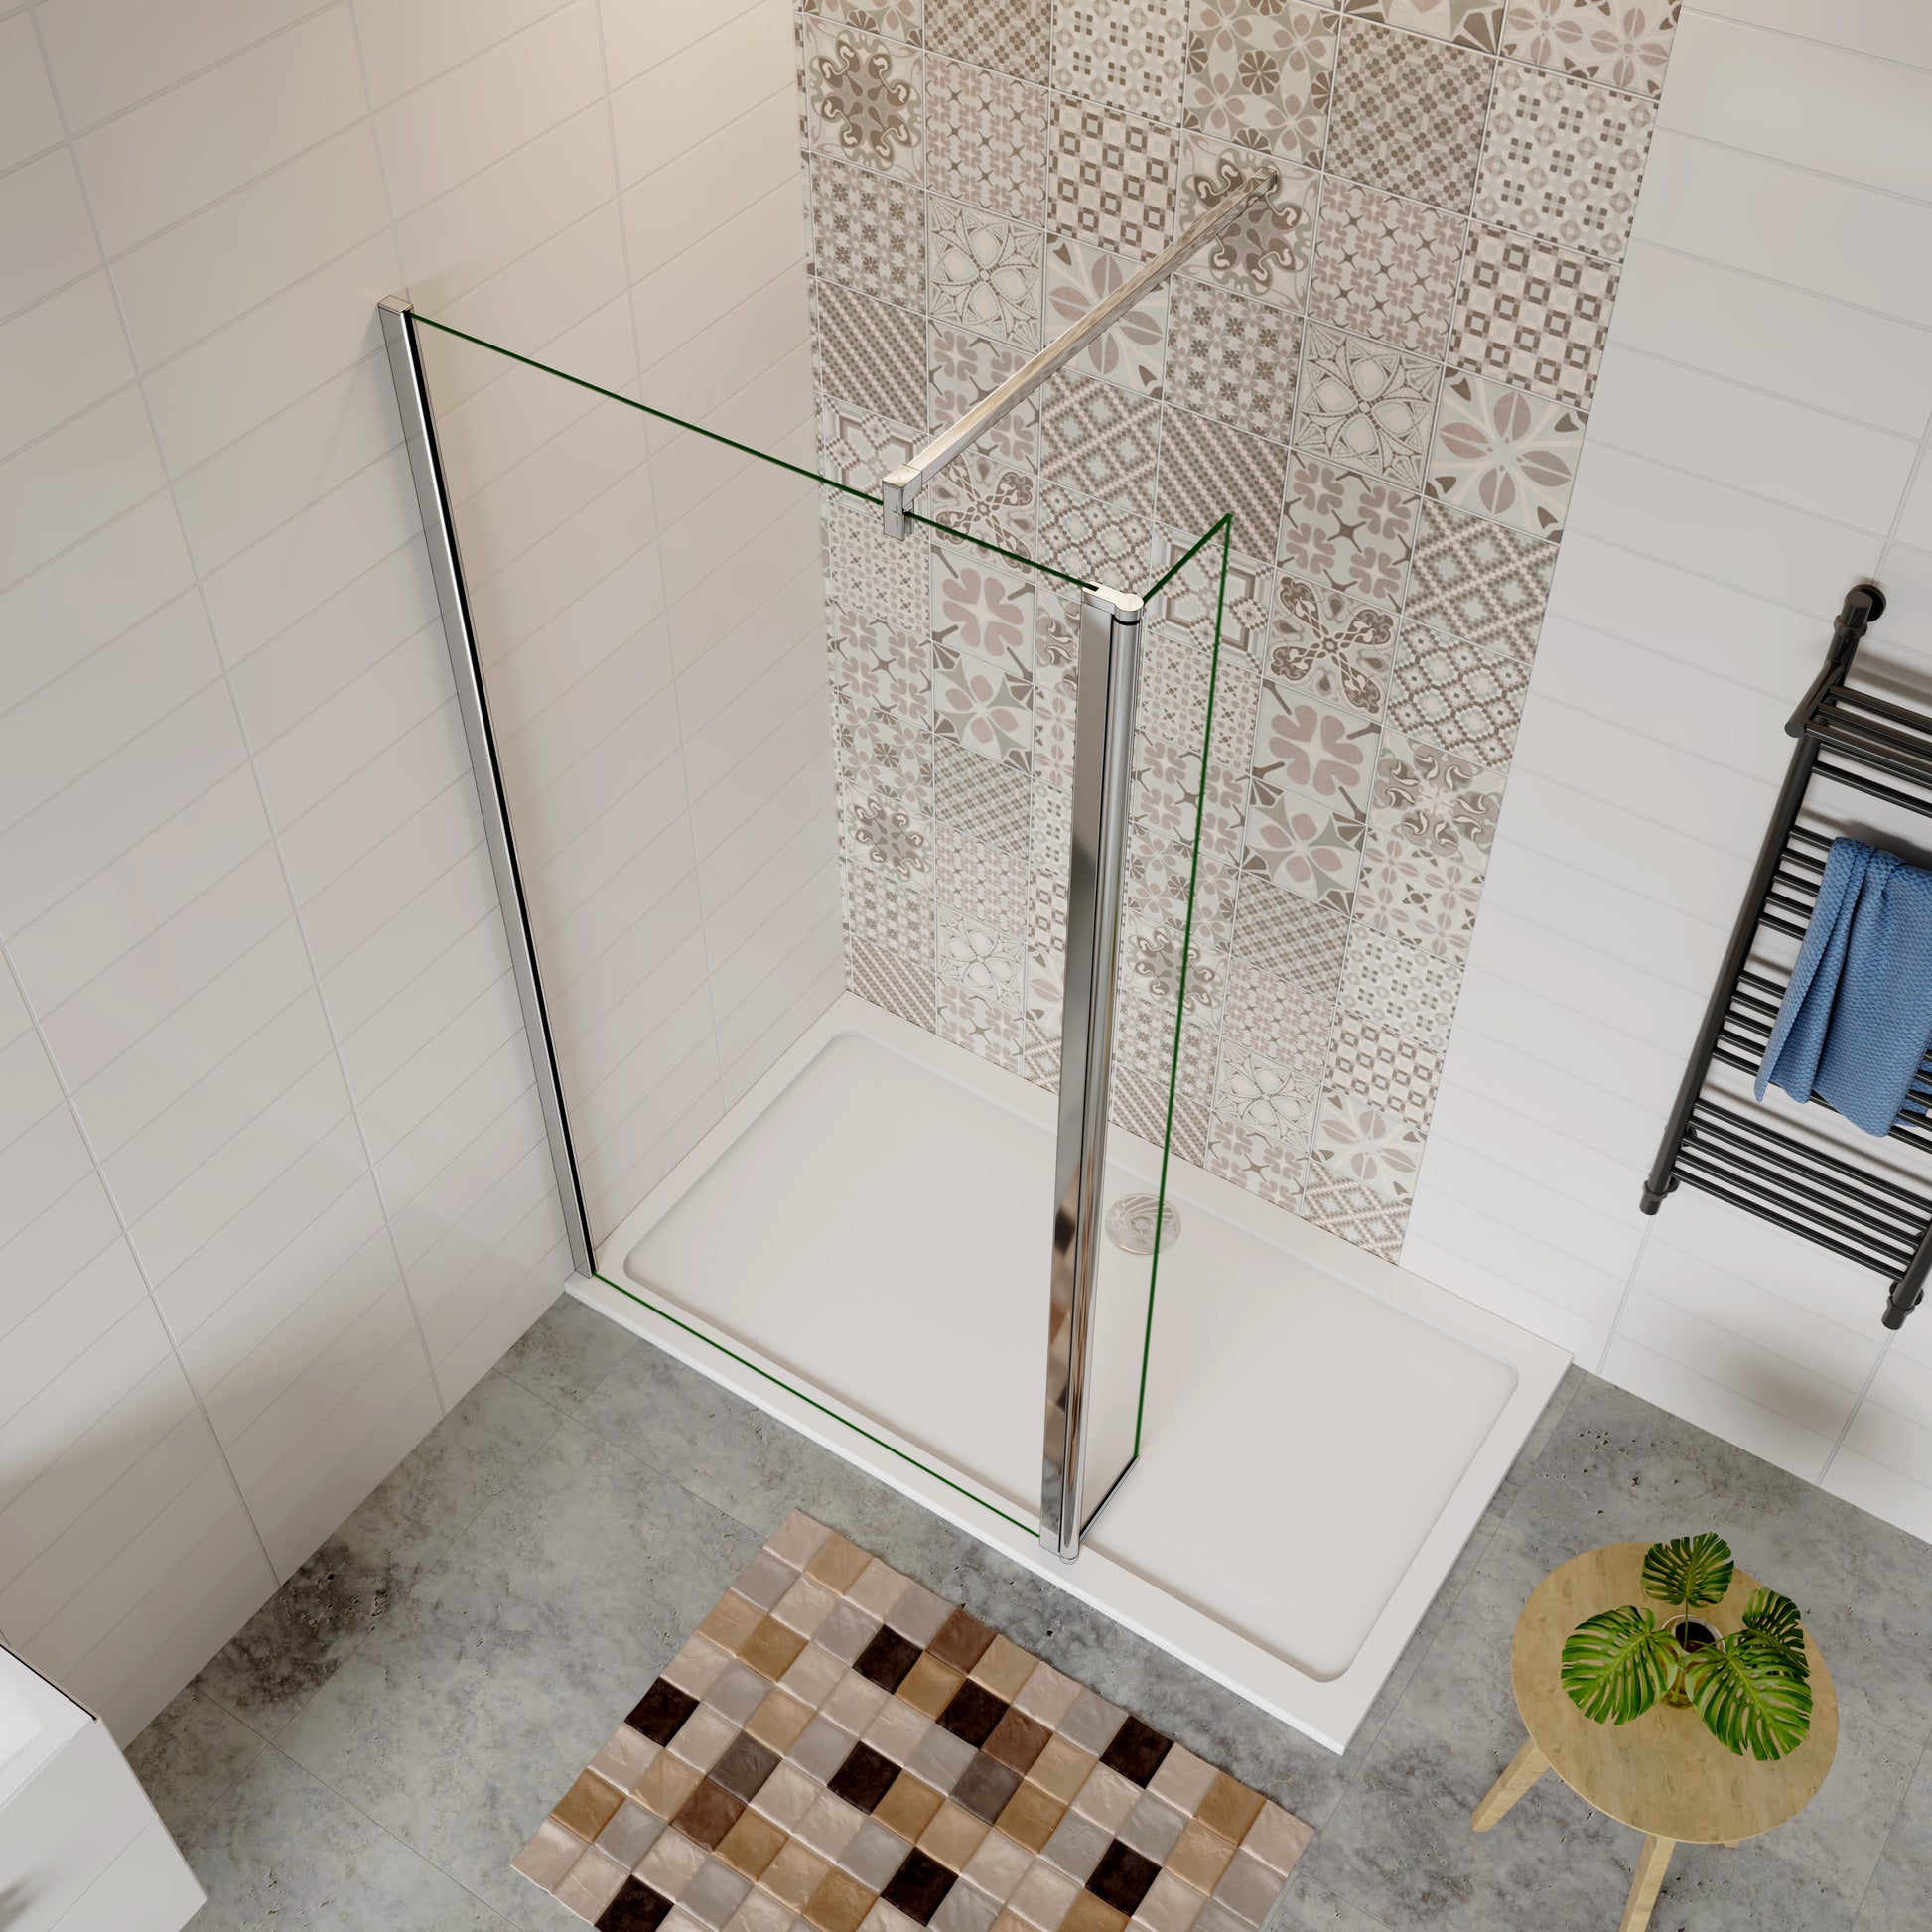 Mamparas ducha Panel Pantalla Fija cristal 10mm templado para baño